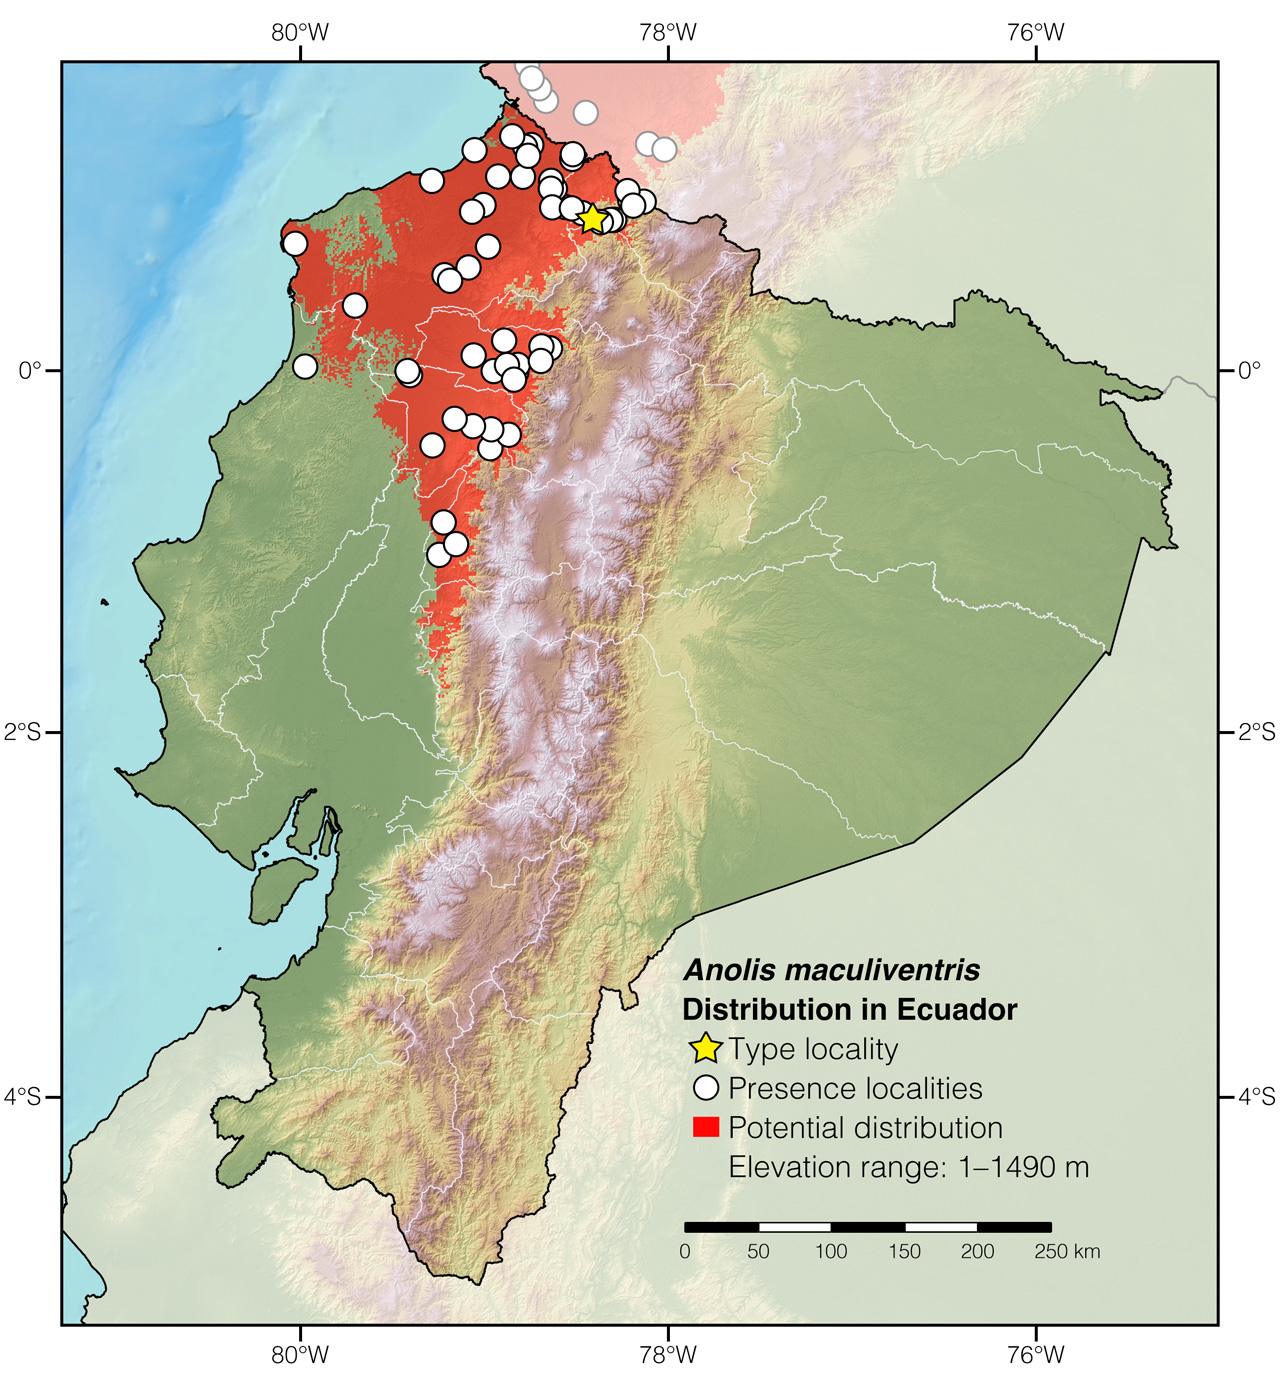 Distribution of Anolis maculiventris in Ecuador